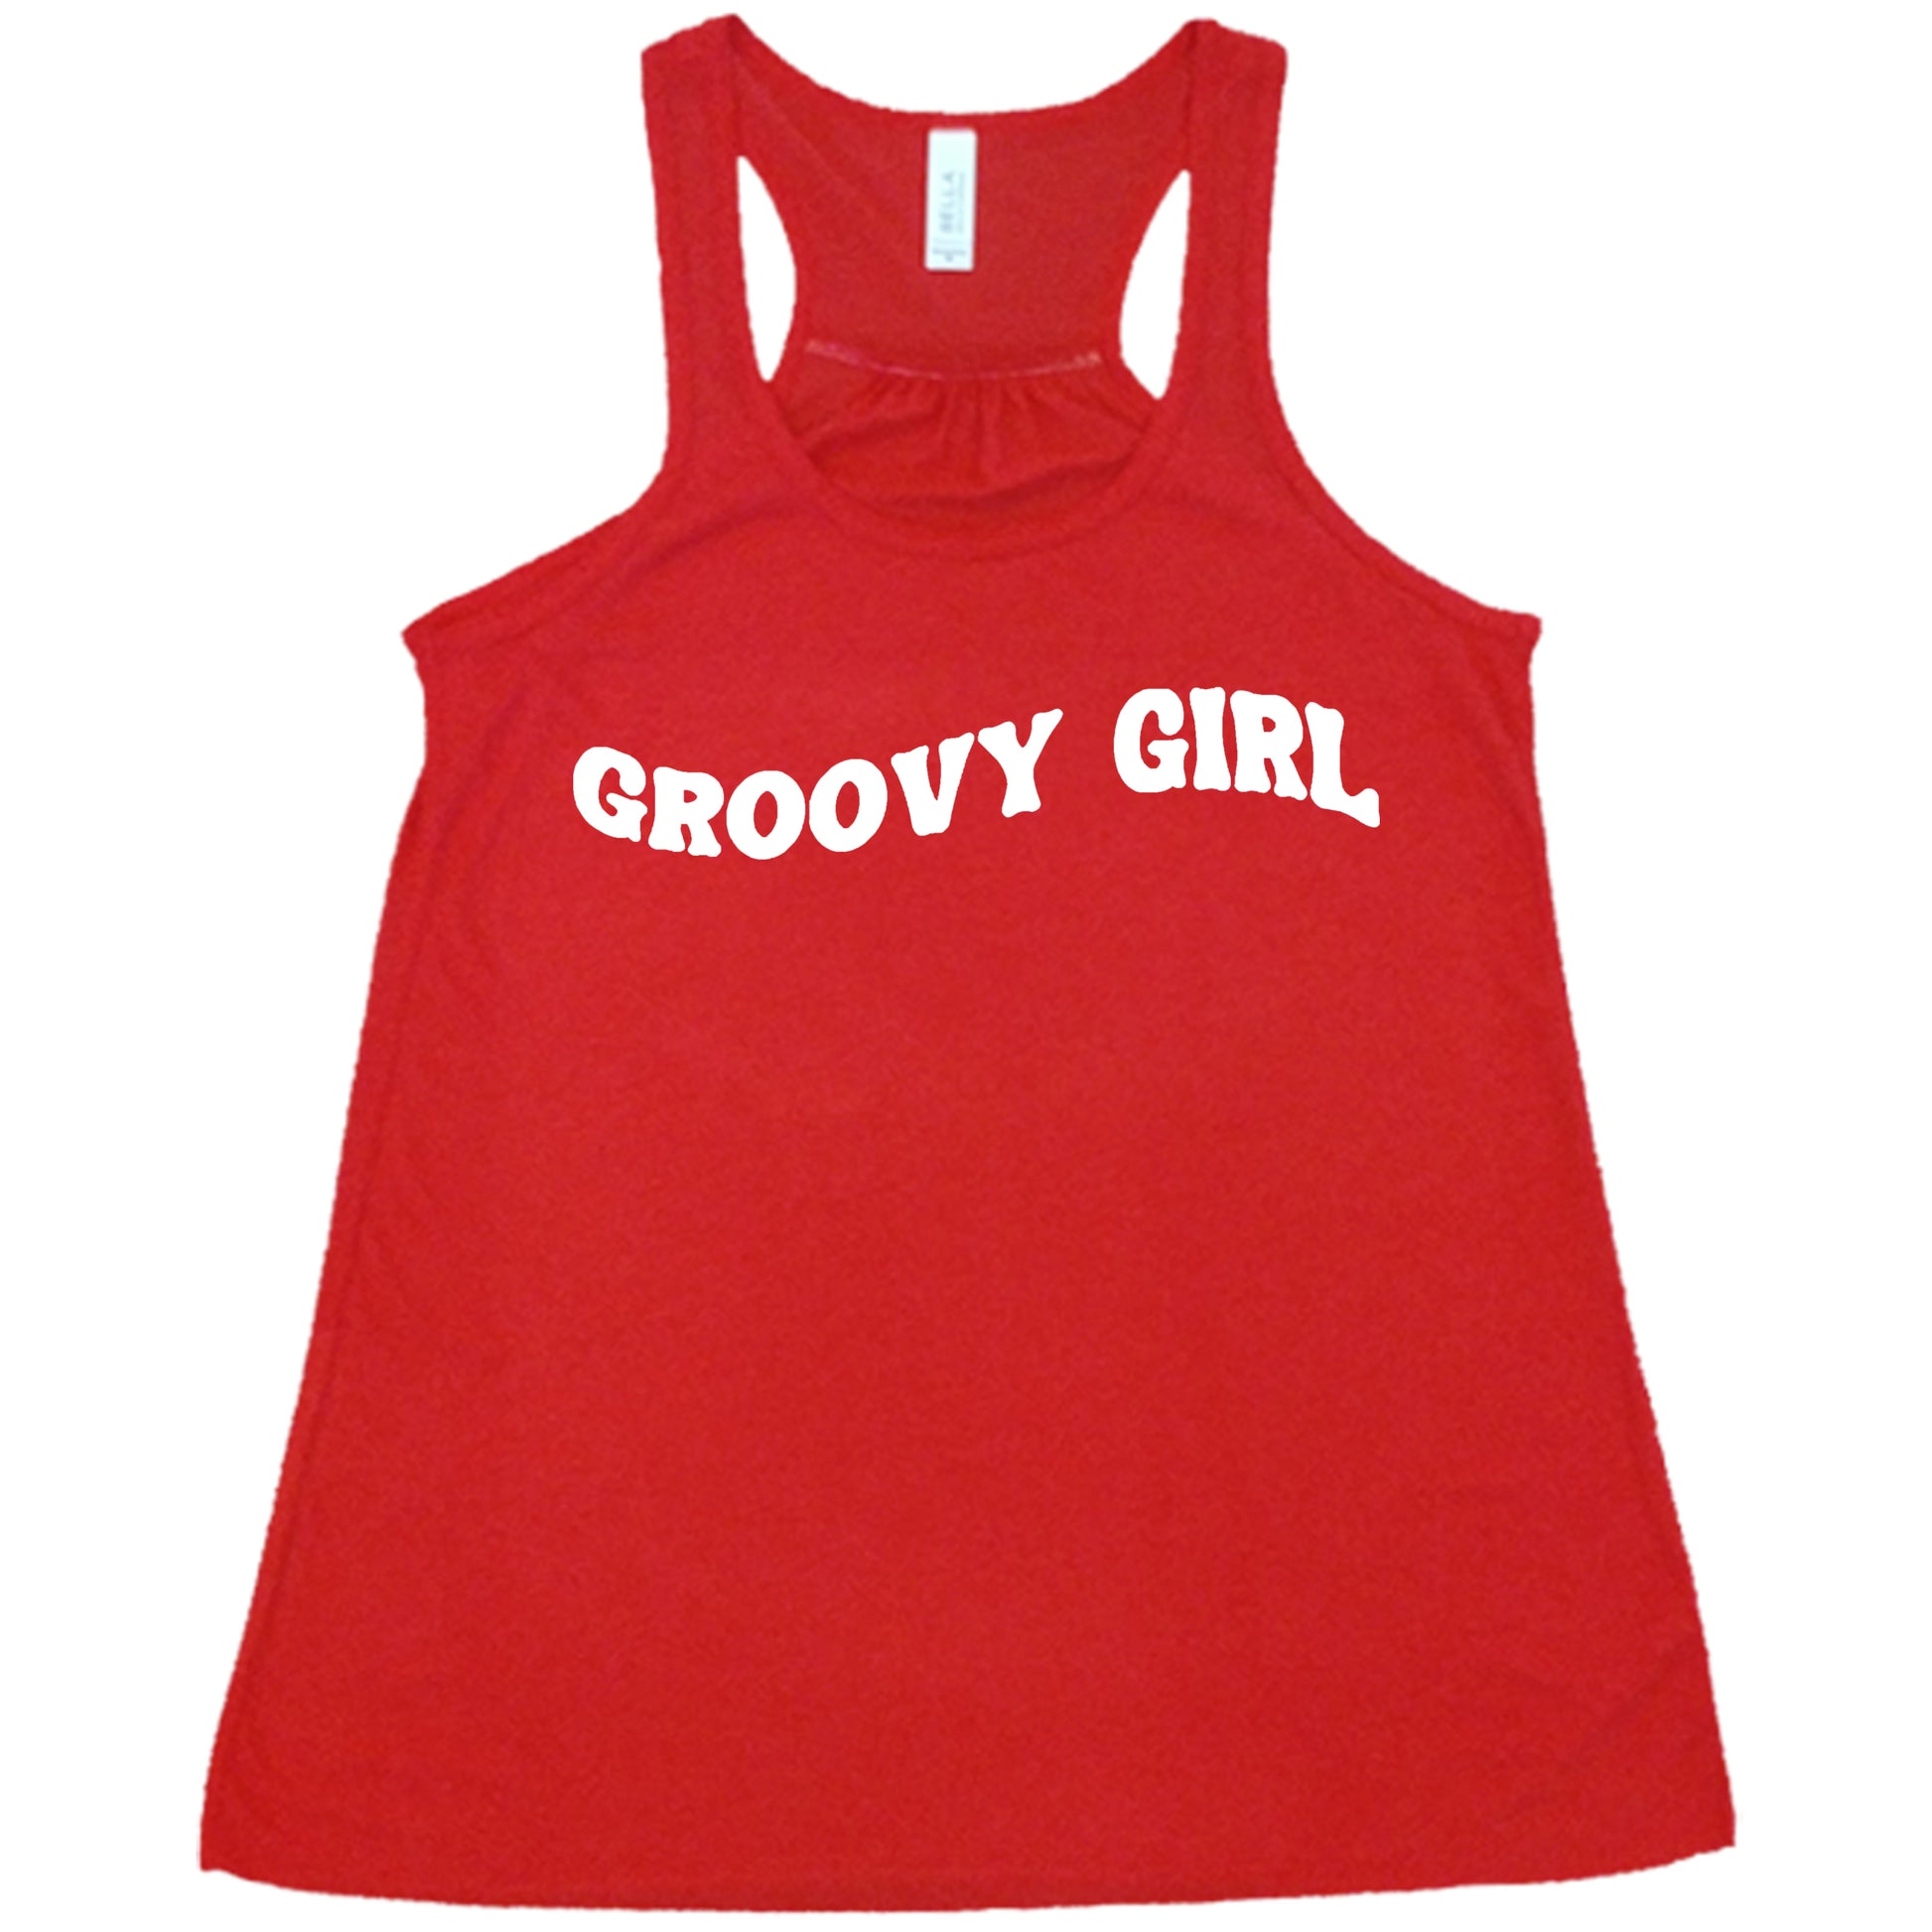 red groovy girl racerback shirt